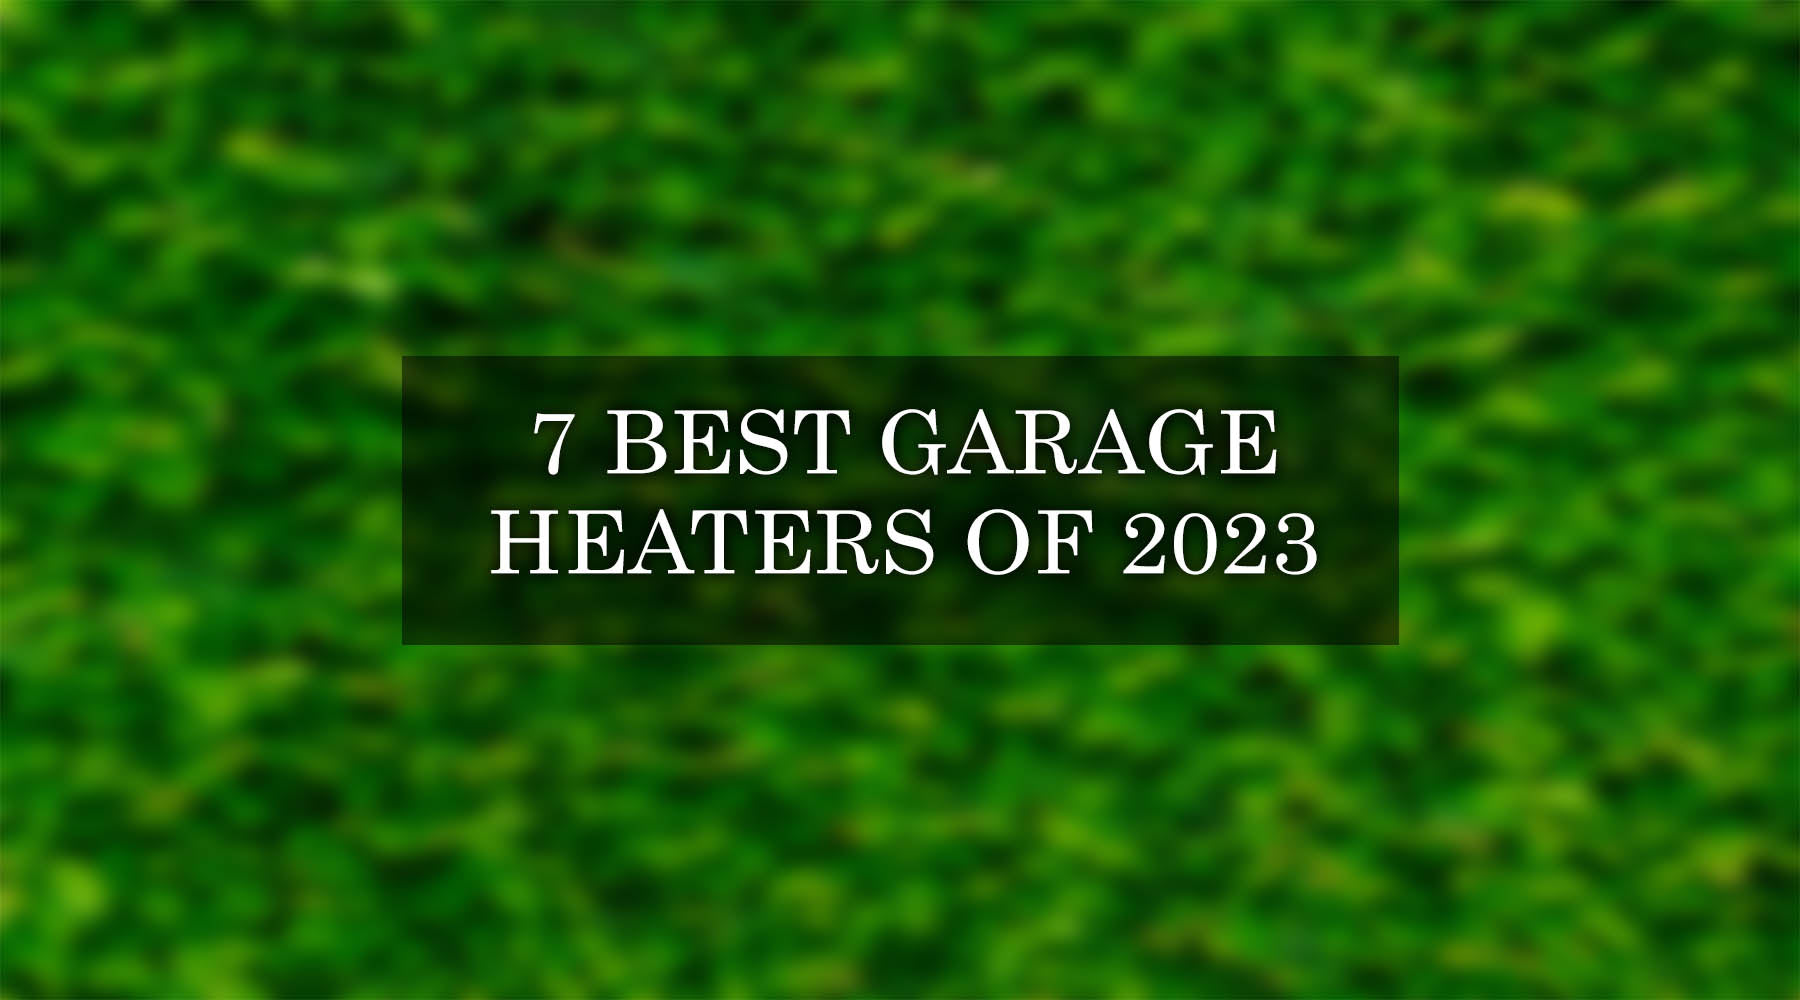 7 Best Garage Heaters of 2023 - Find the Best Heater for a Detached Garage